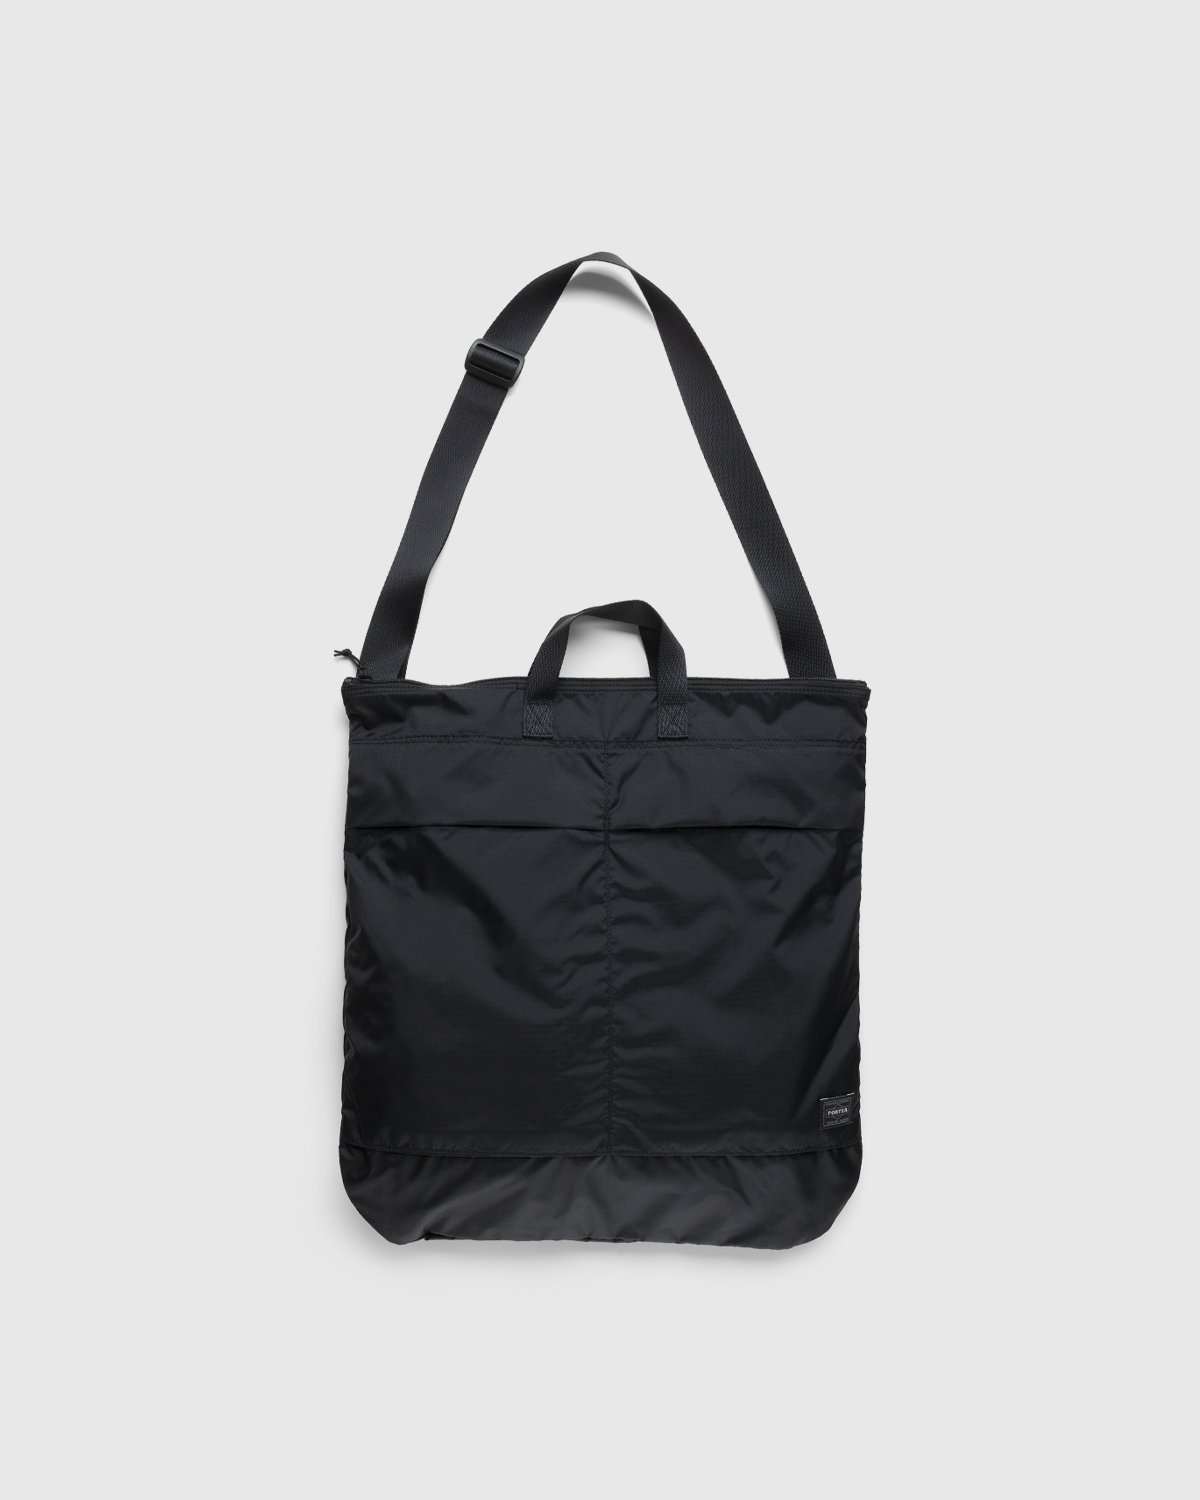 Porter-Yoshida & Co. - Flex 2-Way Helmet Bag Black - Accessories - Black - Image 1